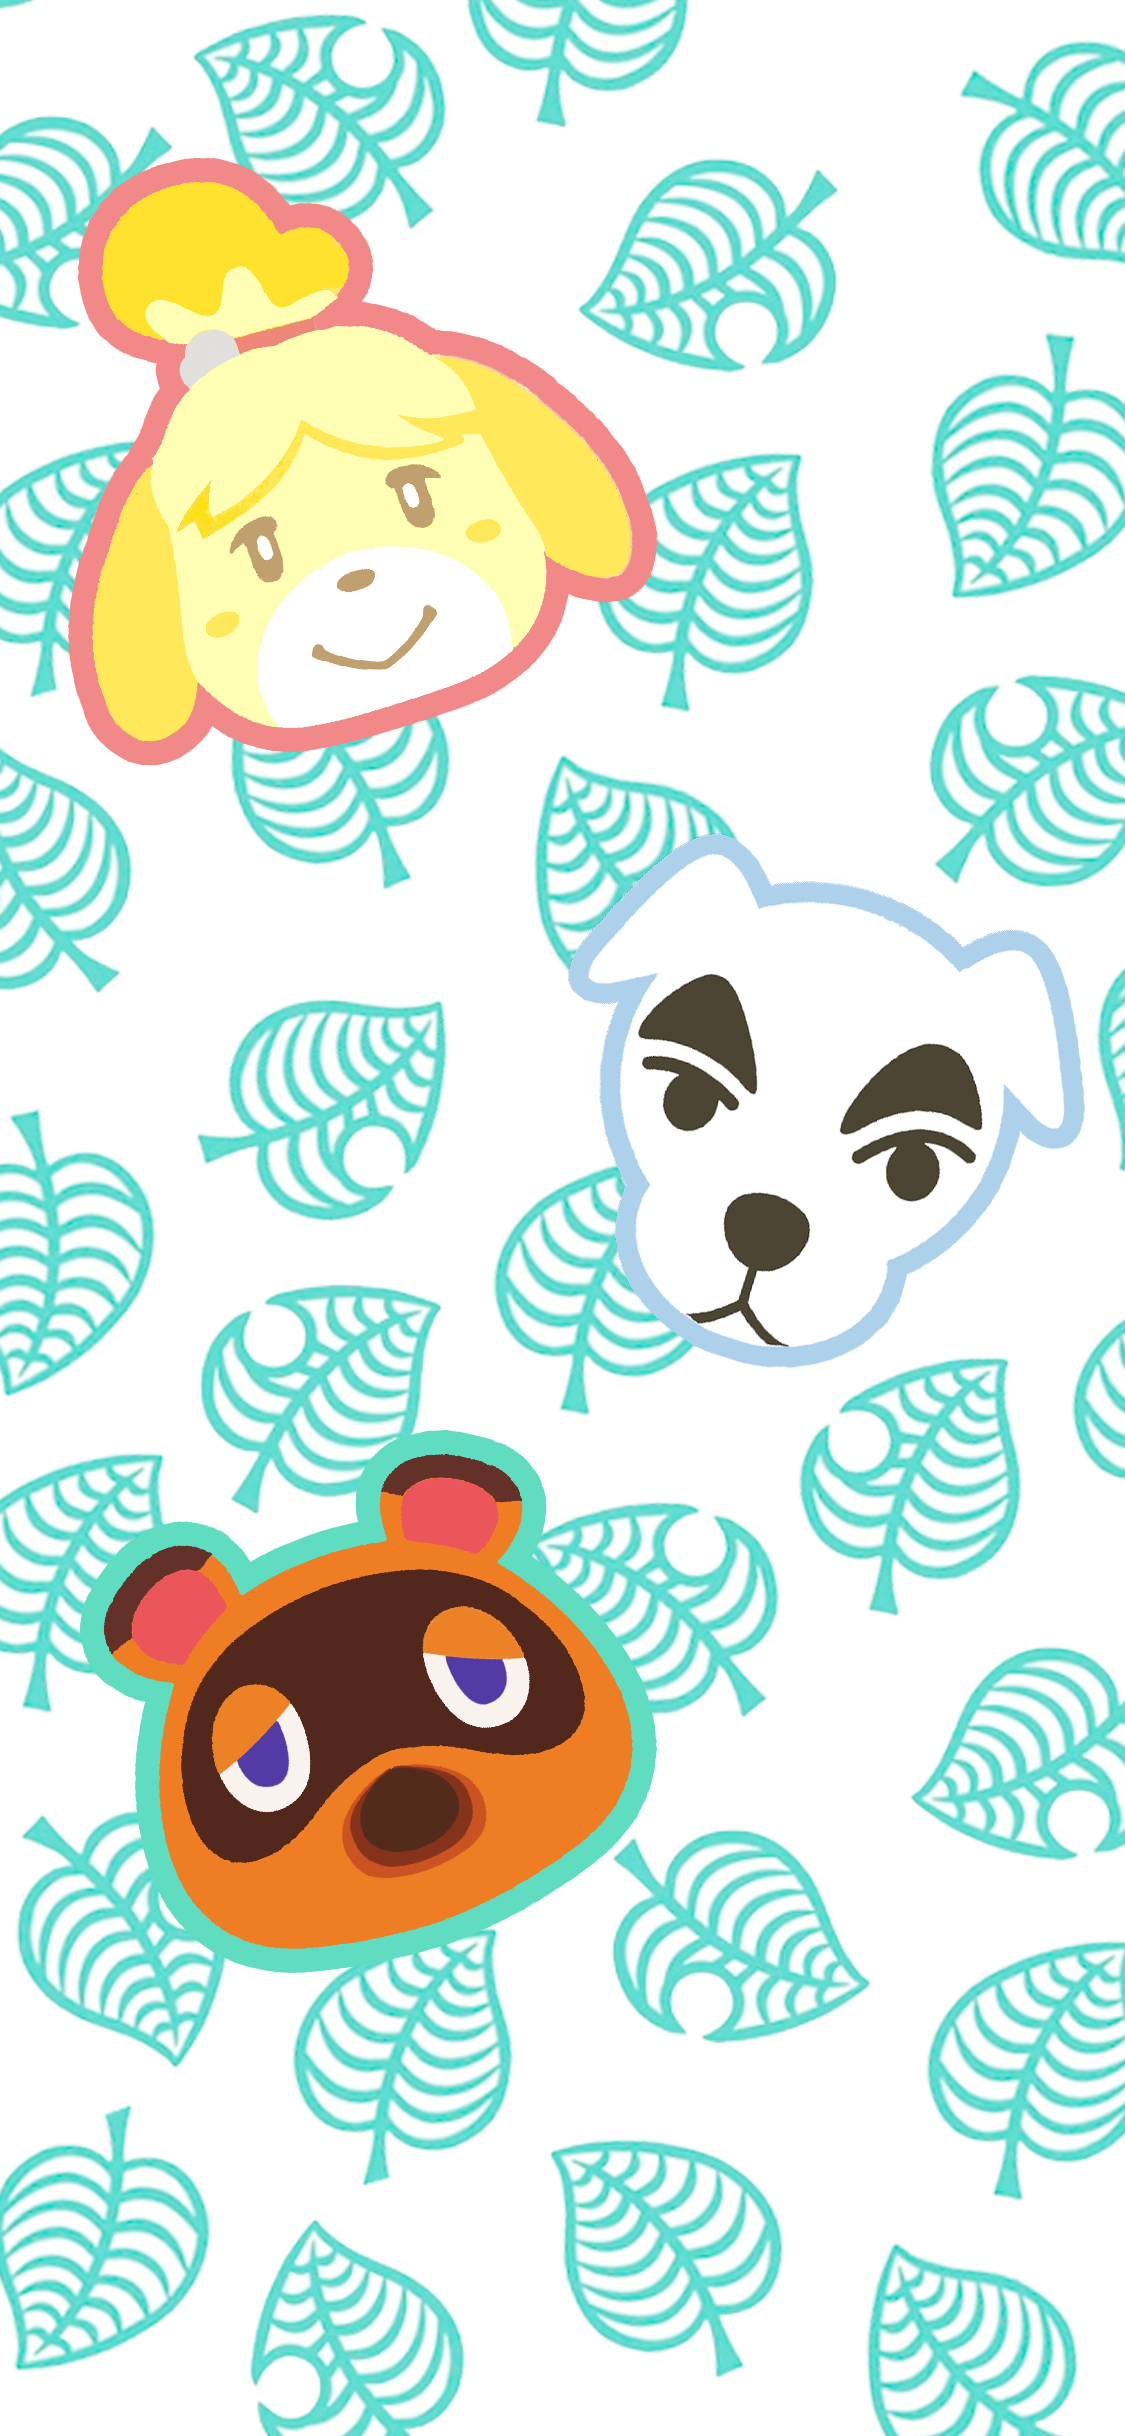 Animal Crossing Wallpapers